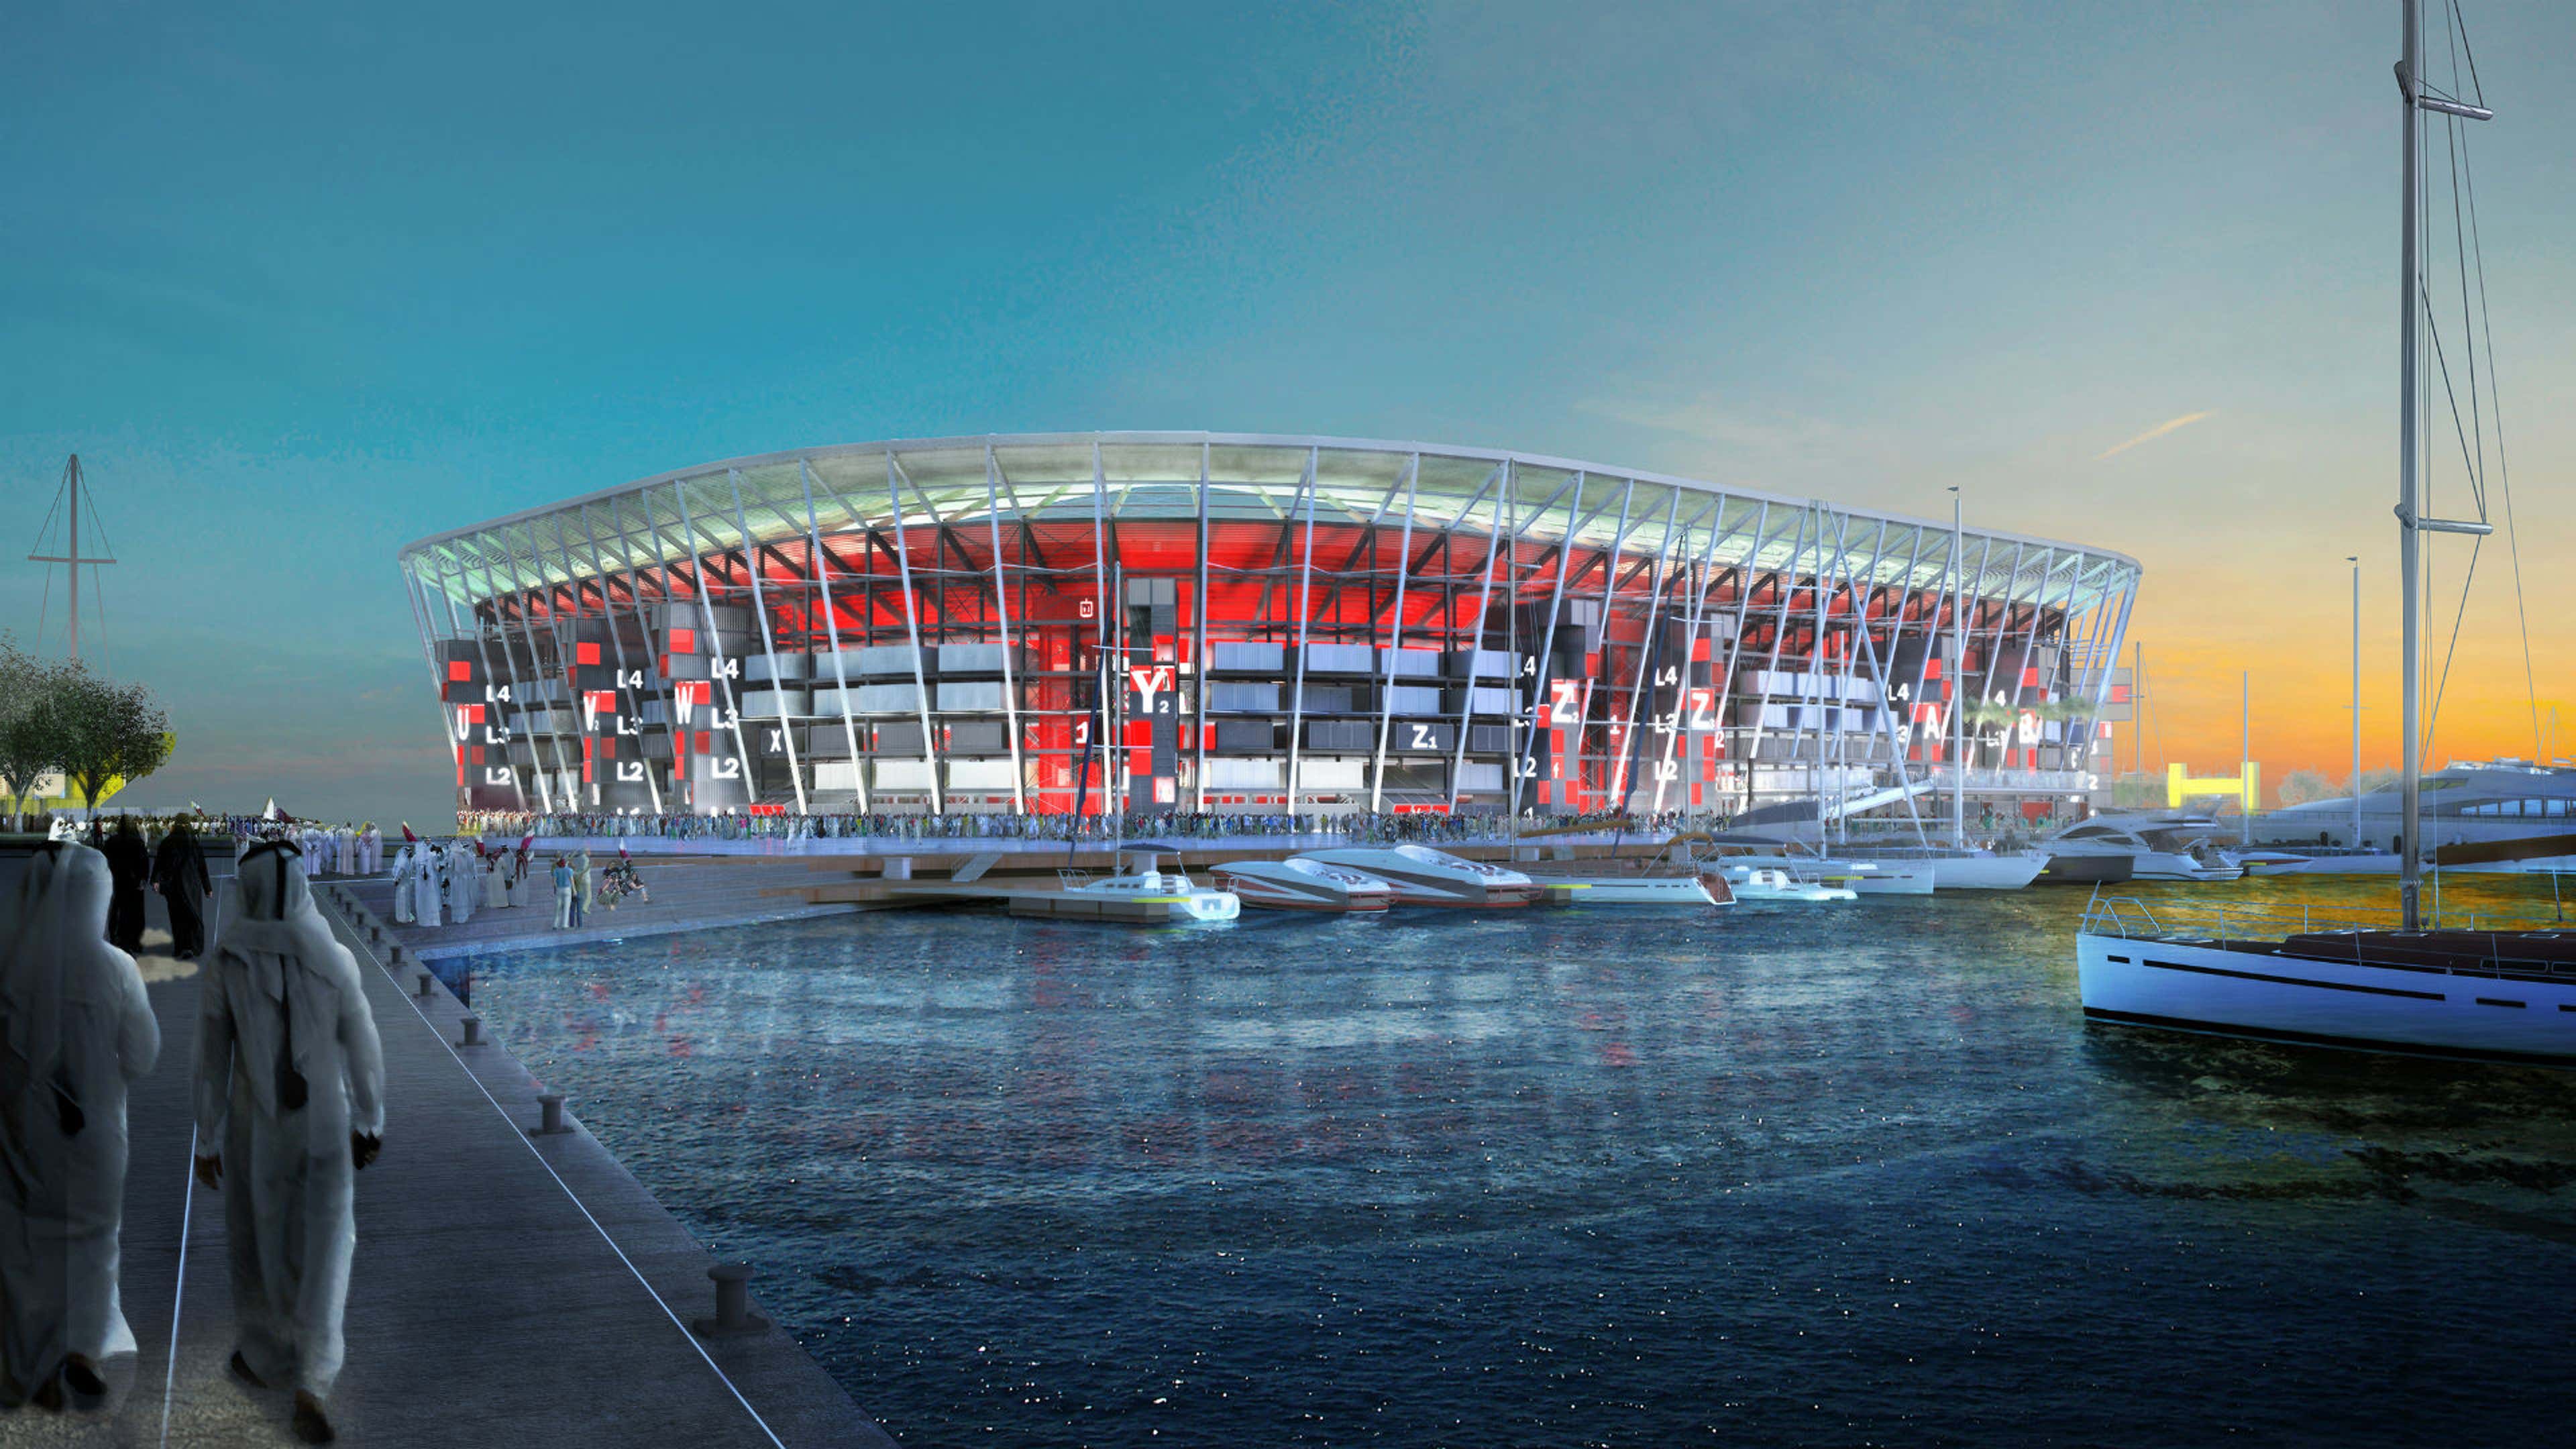 Ras Abu Aboud Stadium Qatar 2022 World Cup